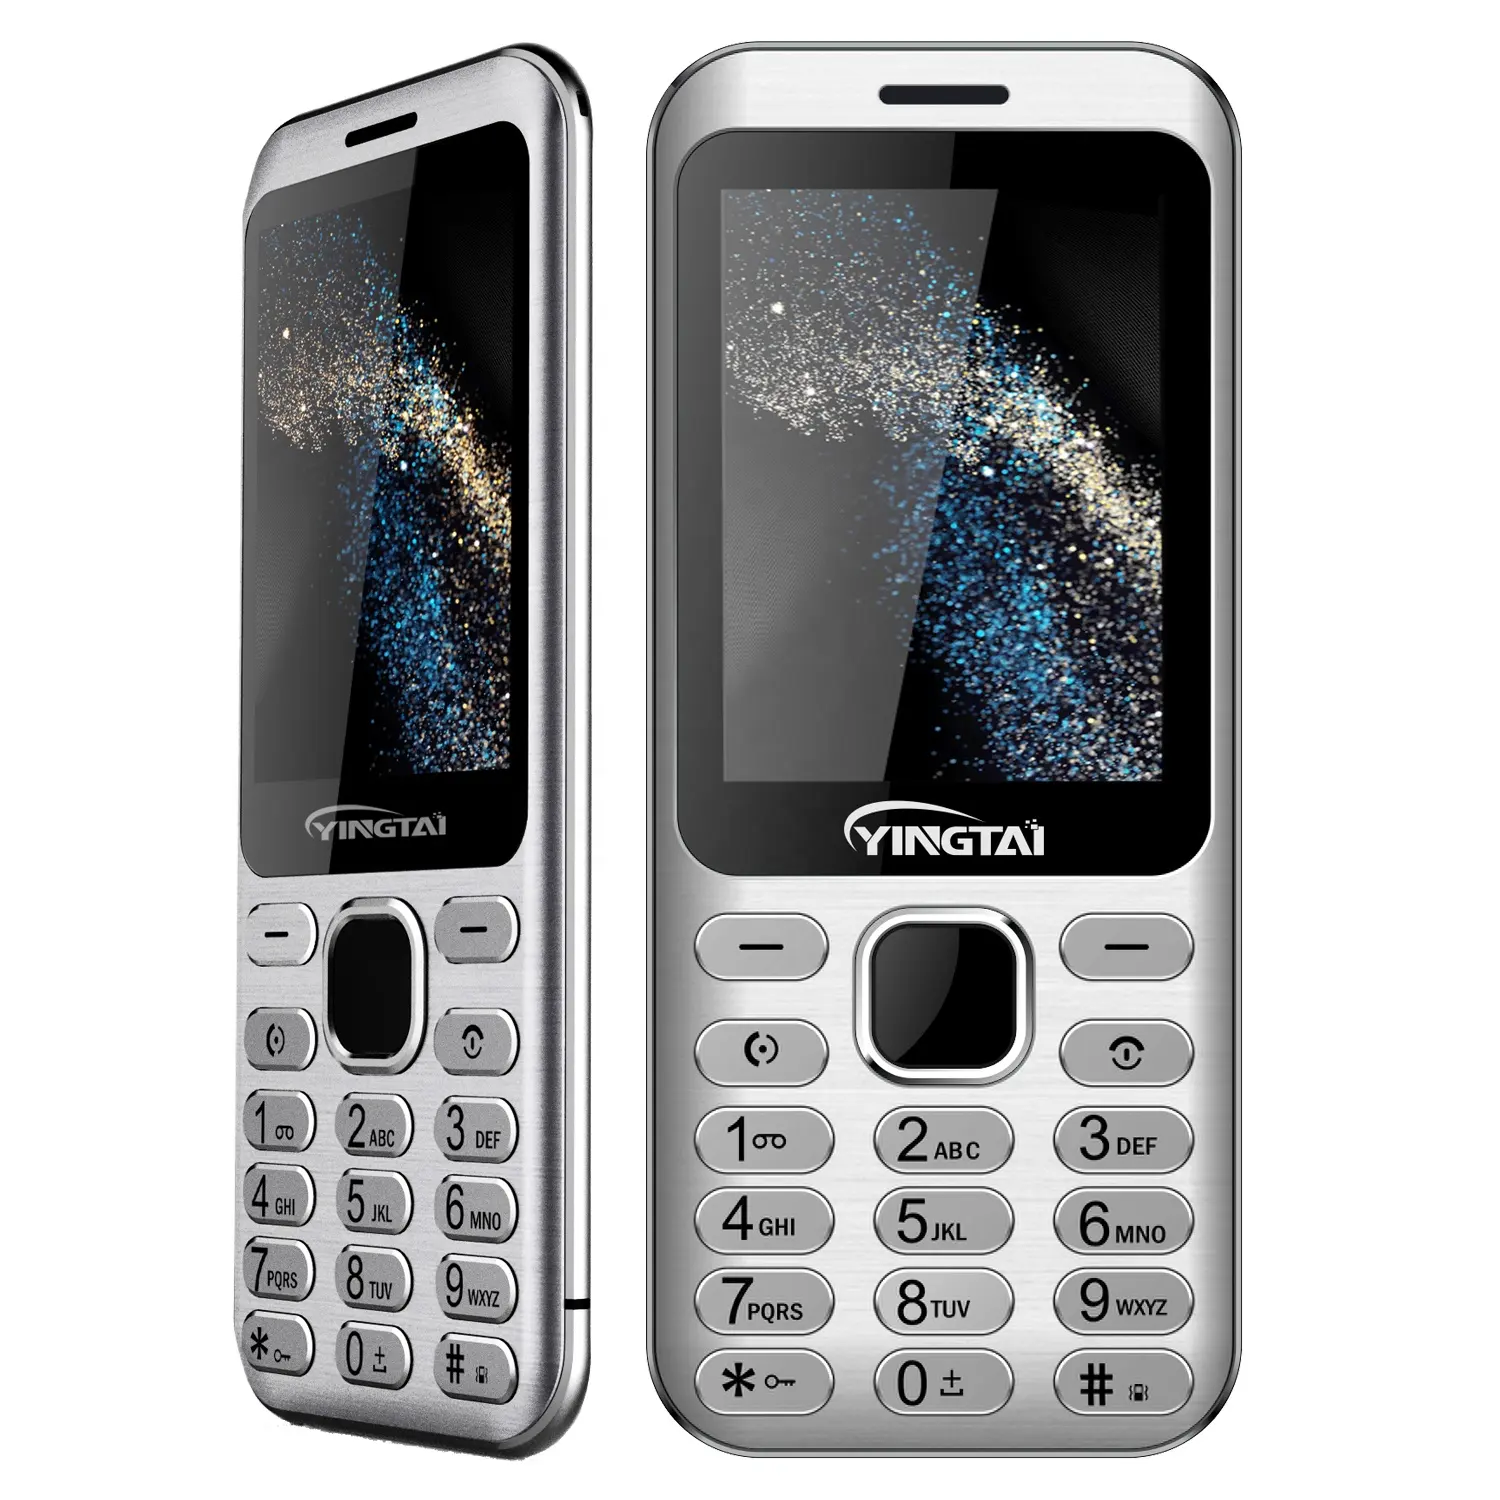 YINGTAI-هاتف ذكي, لوحة مفاتيح معدنية مخصصة فائقة النحافة مقاس 2.8 بوصة مزود بلوحة مفاتيح للهواتف المحمولة بسعر منخفض